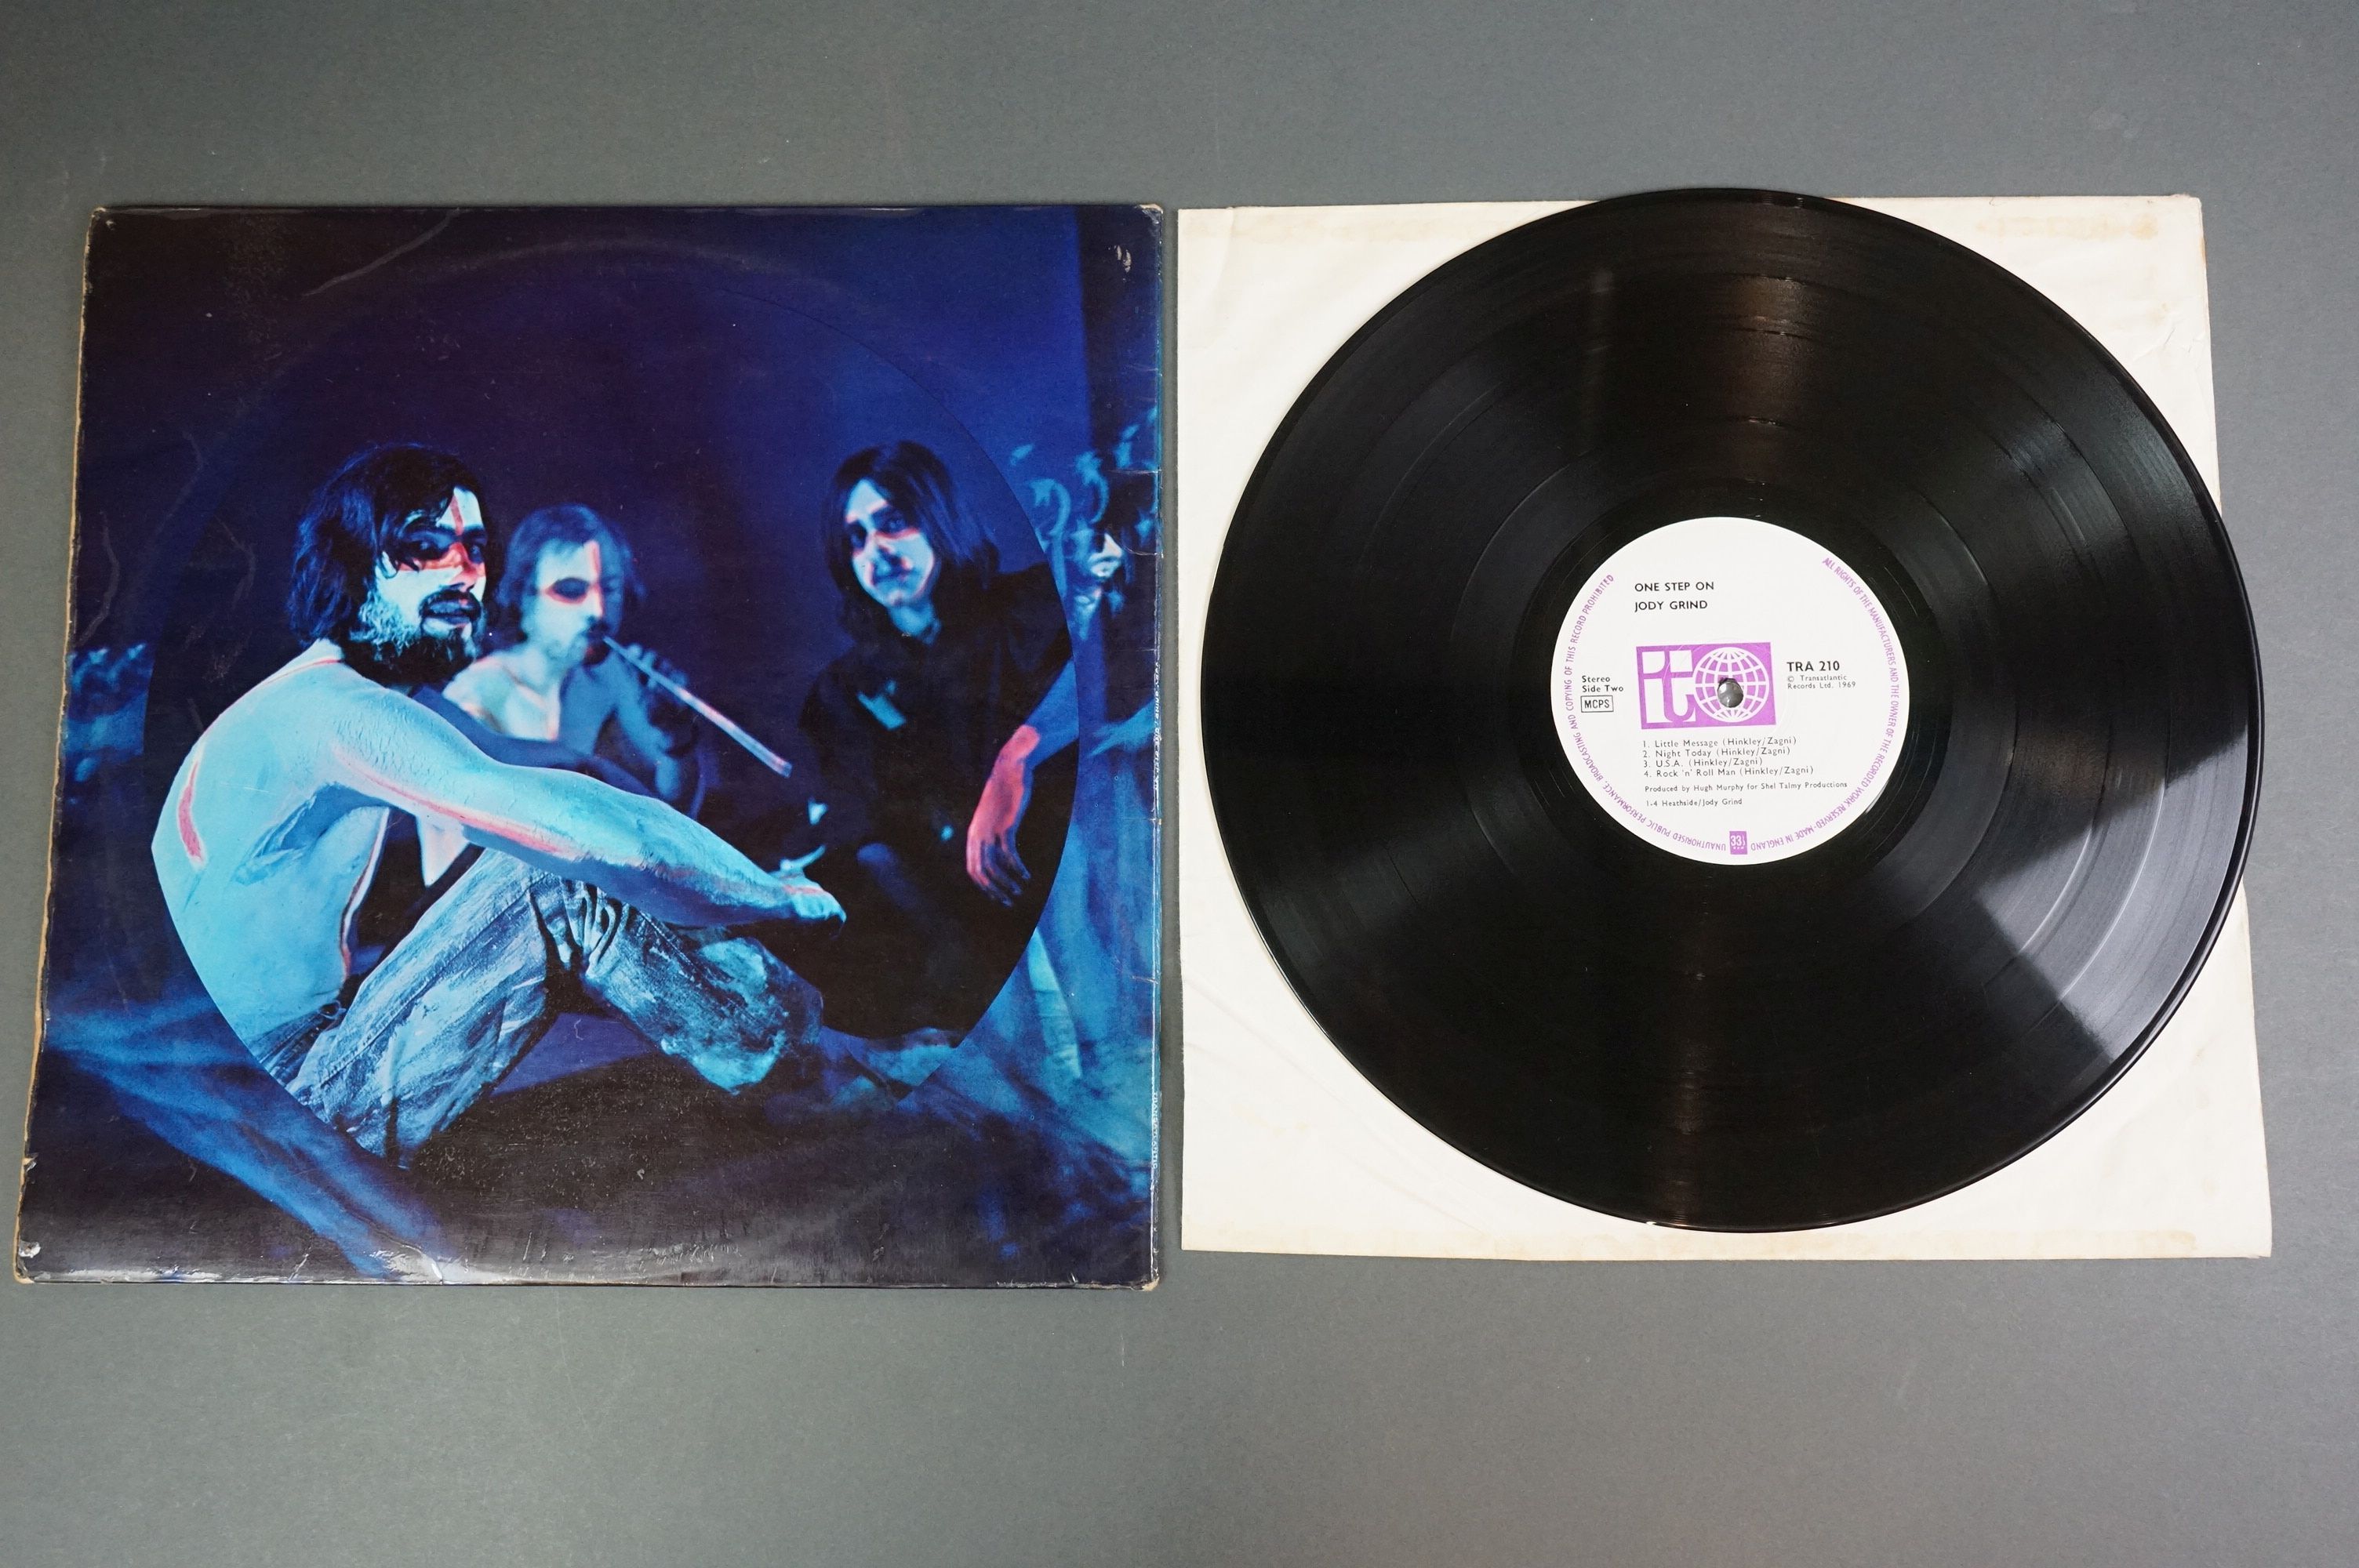 Vinyl - Jody Grind One Step On LP TRA210 purple white Transatlantic label 't' logo, gatefold sleeve, - Image 3 of 4